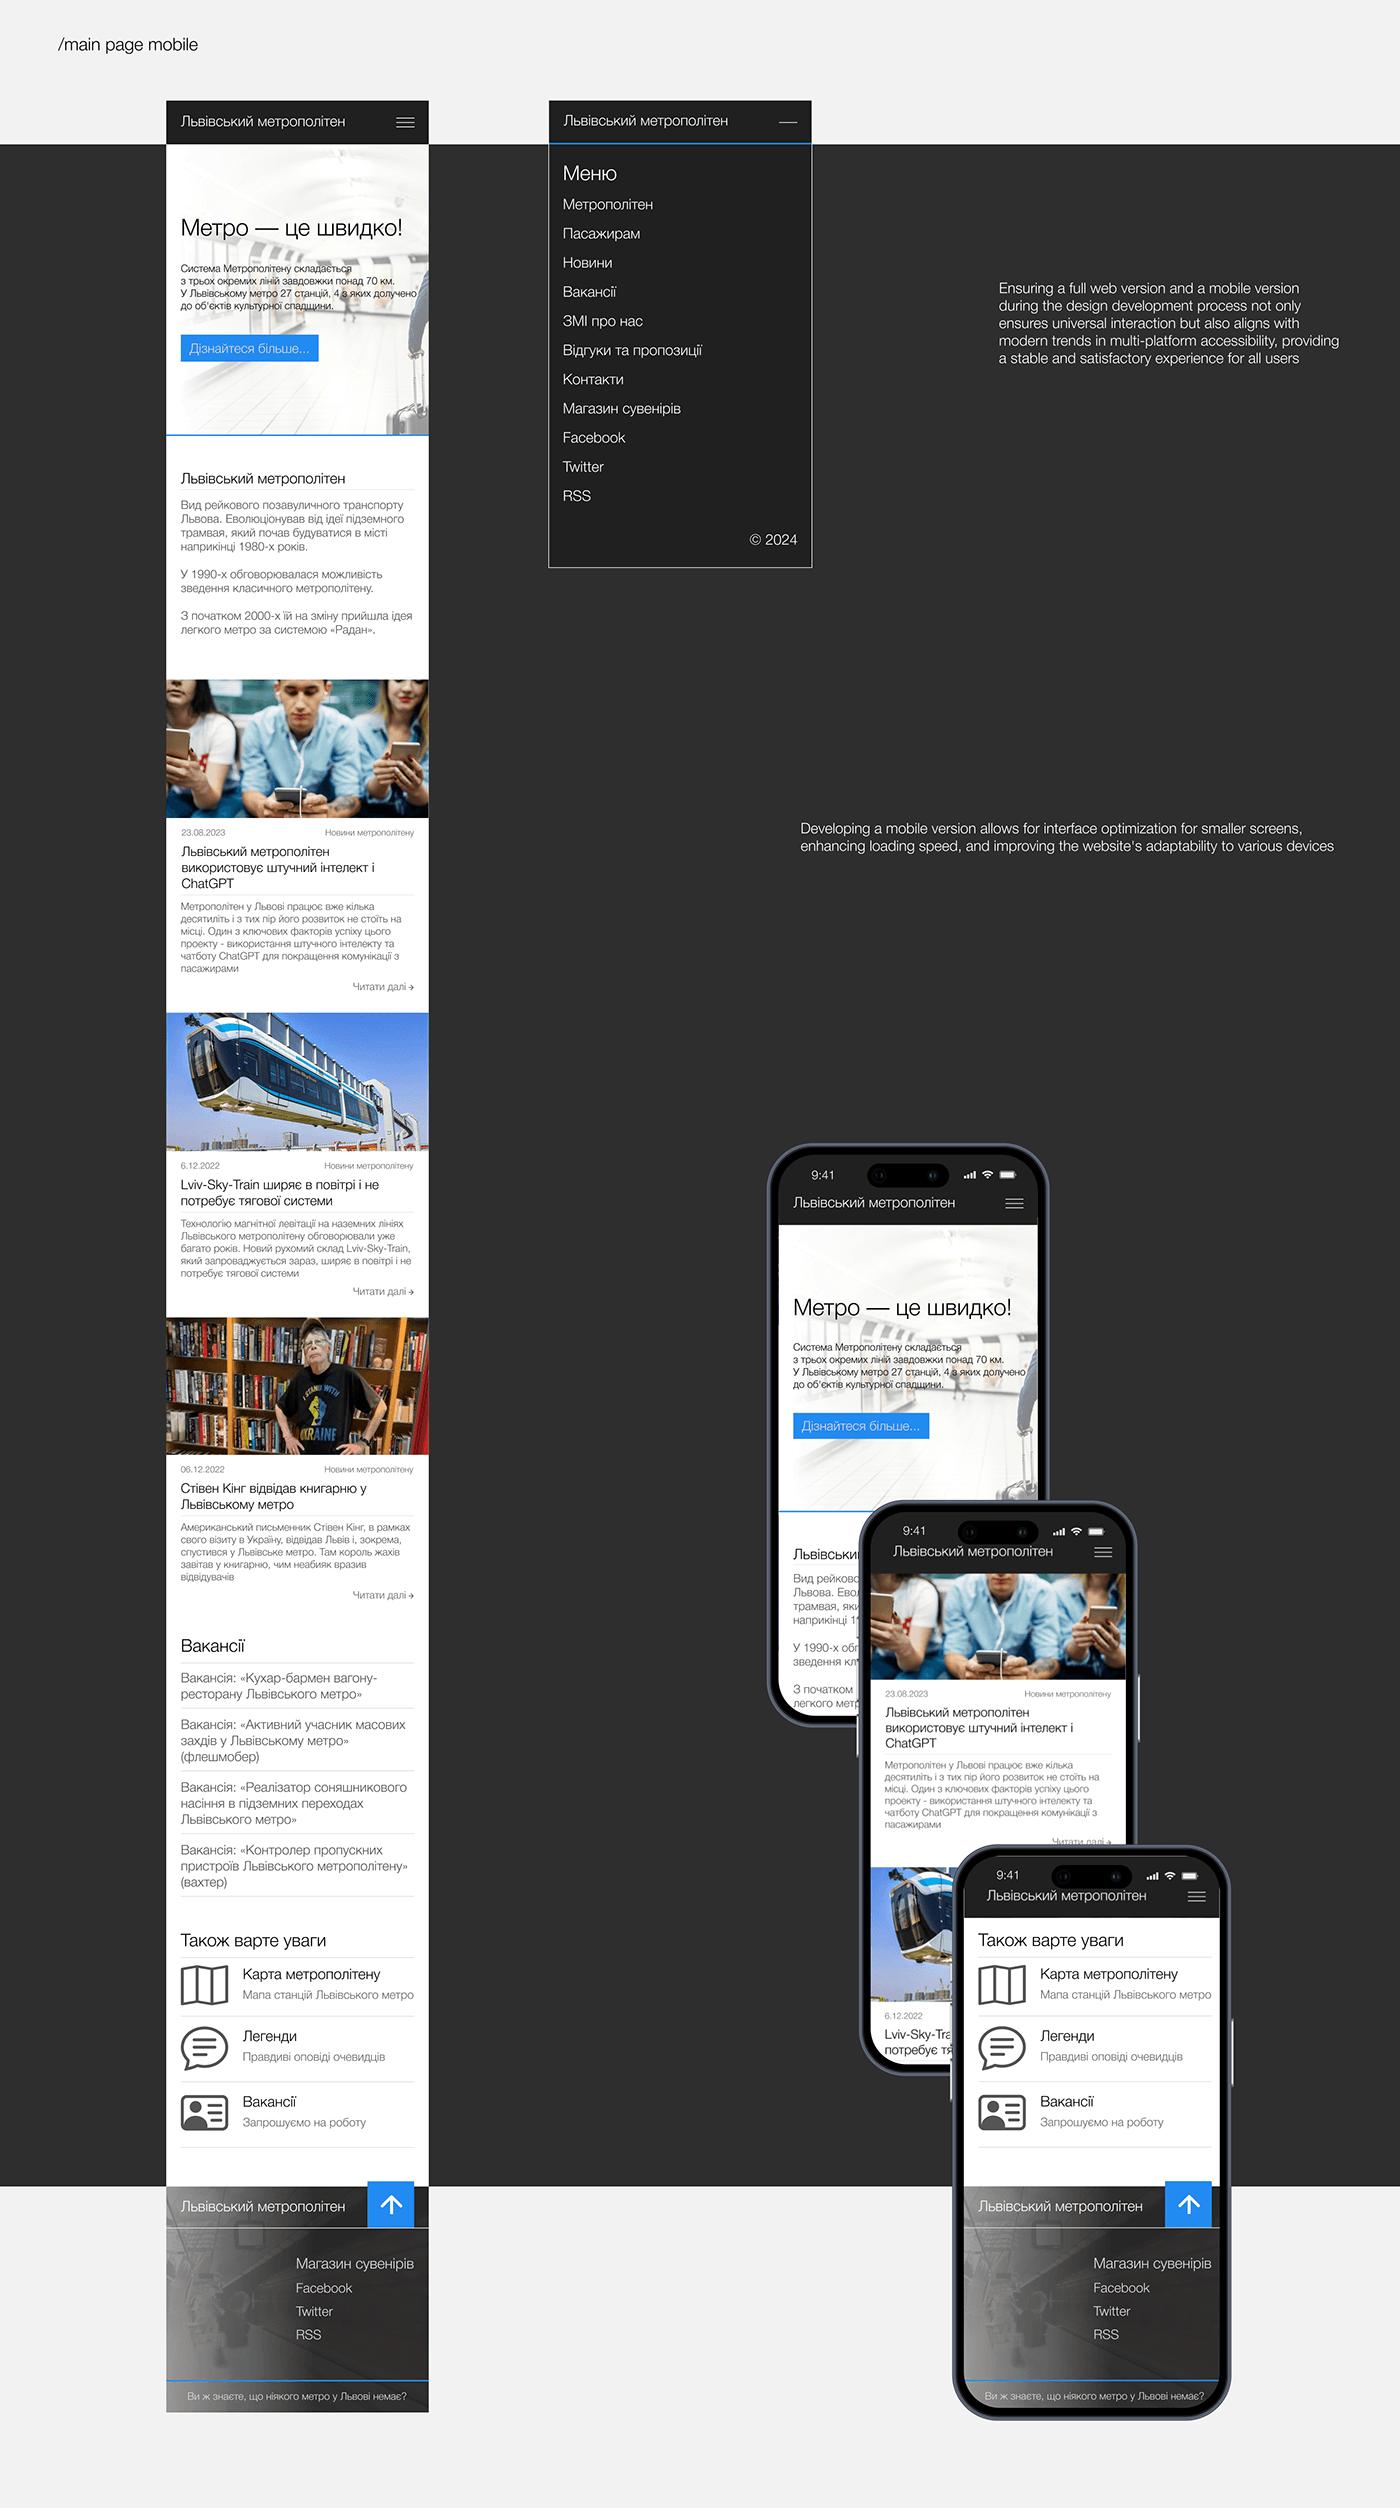 mobile menu of the website